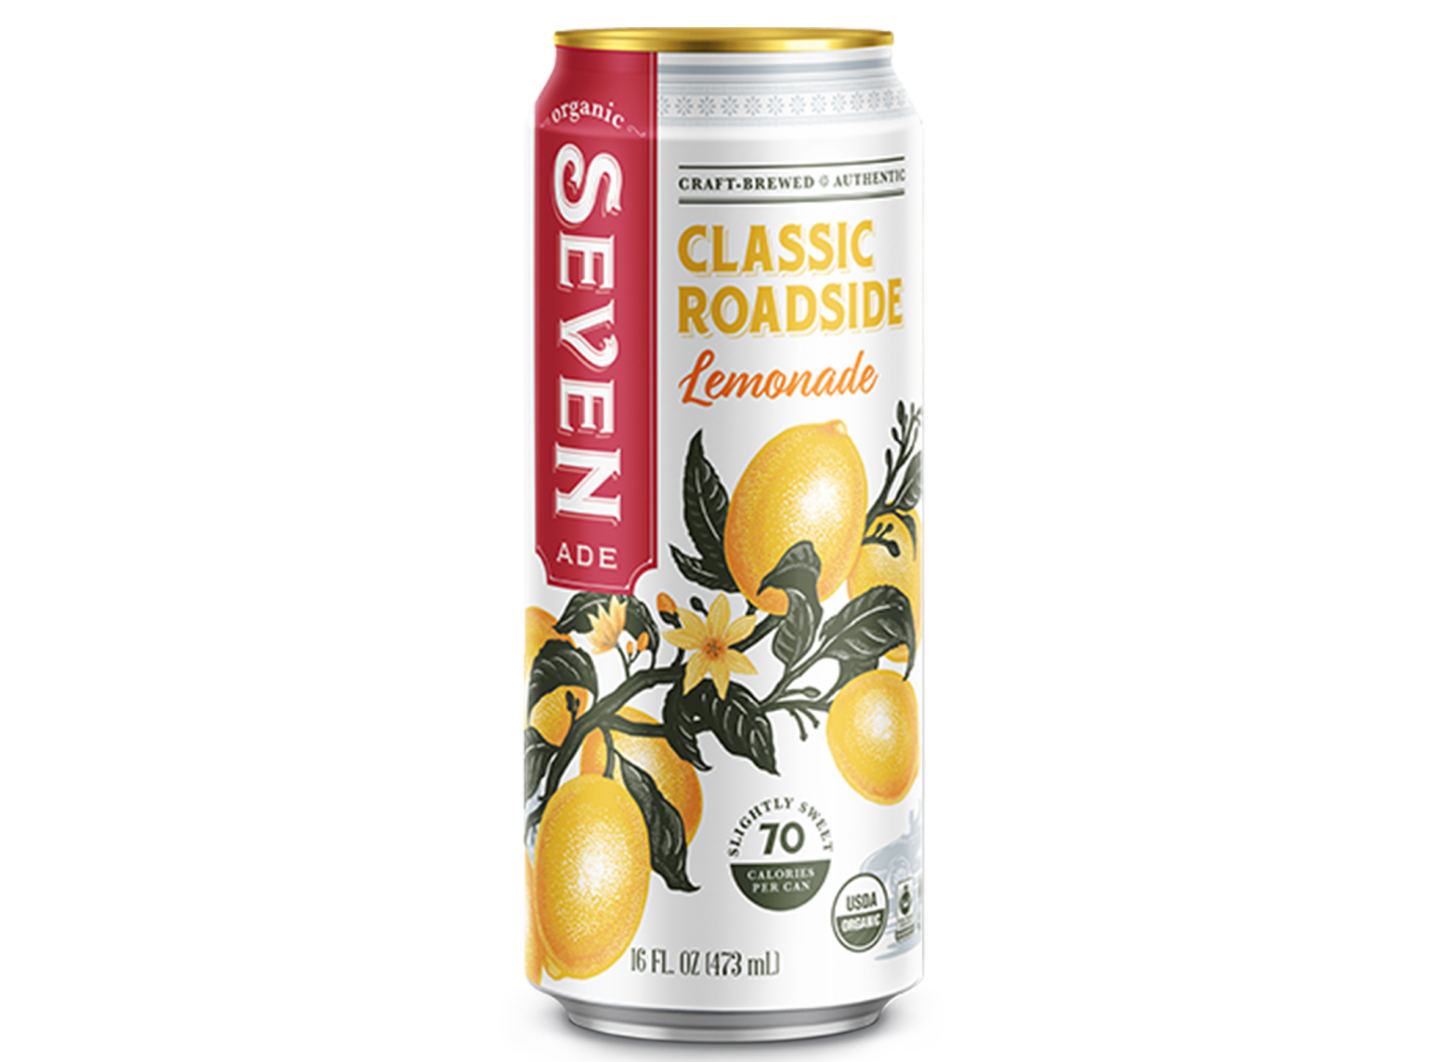 Classic Roadside Lemonade